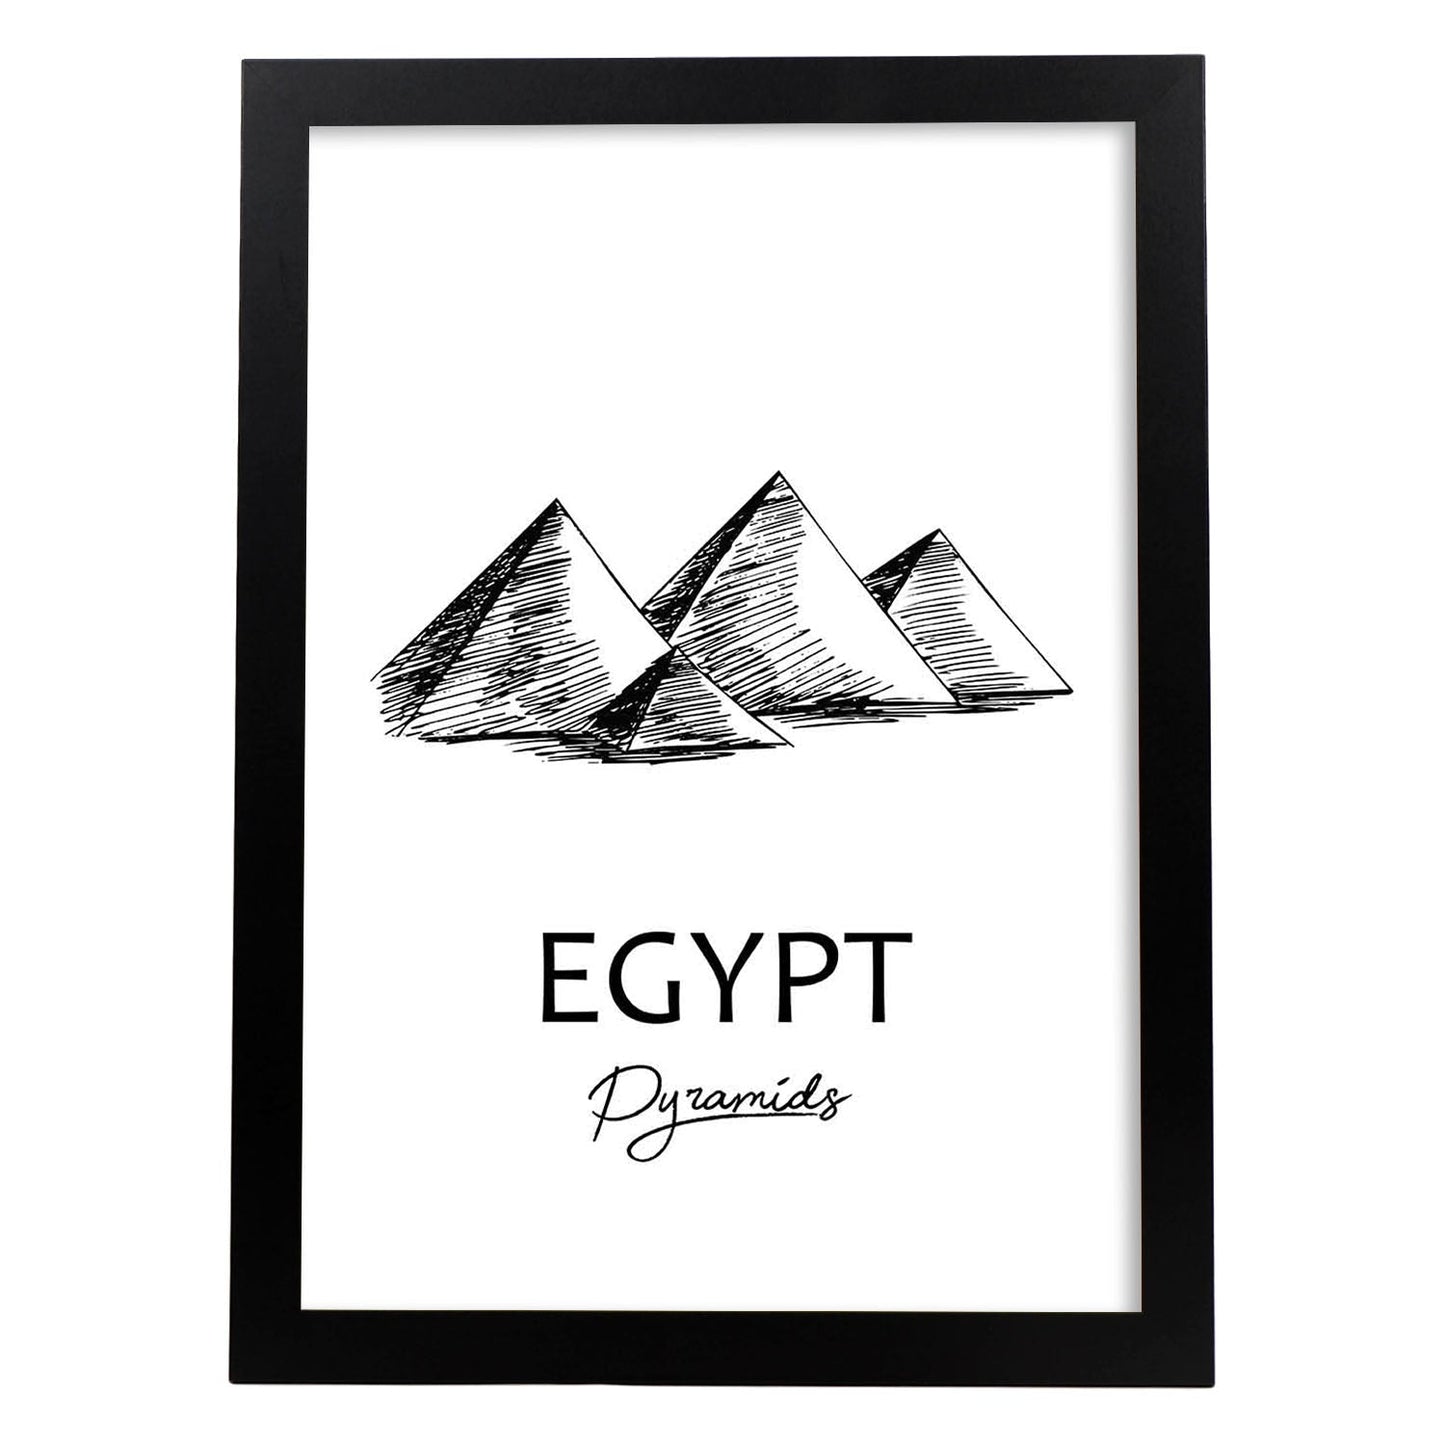 Poster de Egipto - Pirámides. Láminas con monumentos de ciudades.-Artwork-Nacnic-A3-Marco Negro-Nacnic Estudio SL